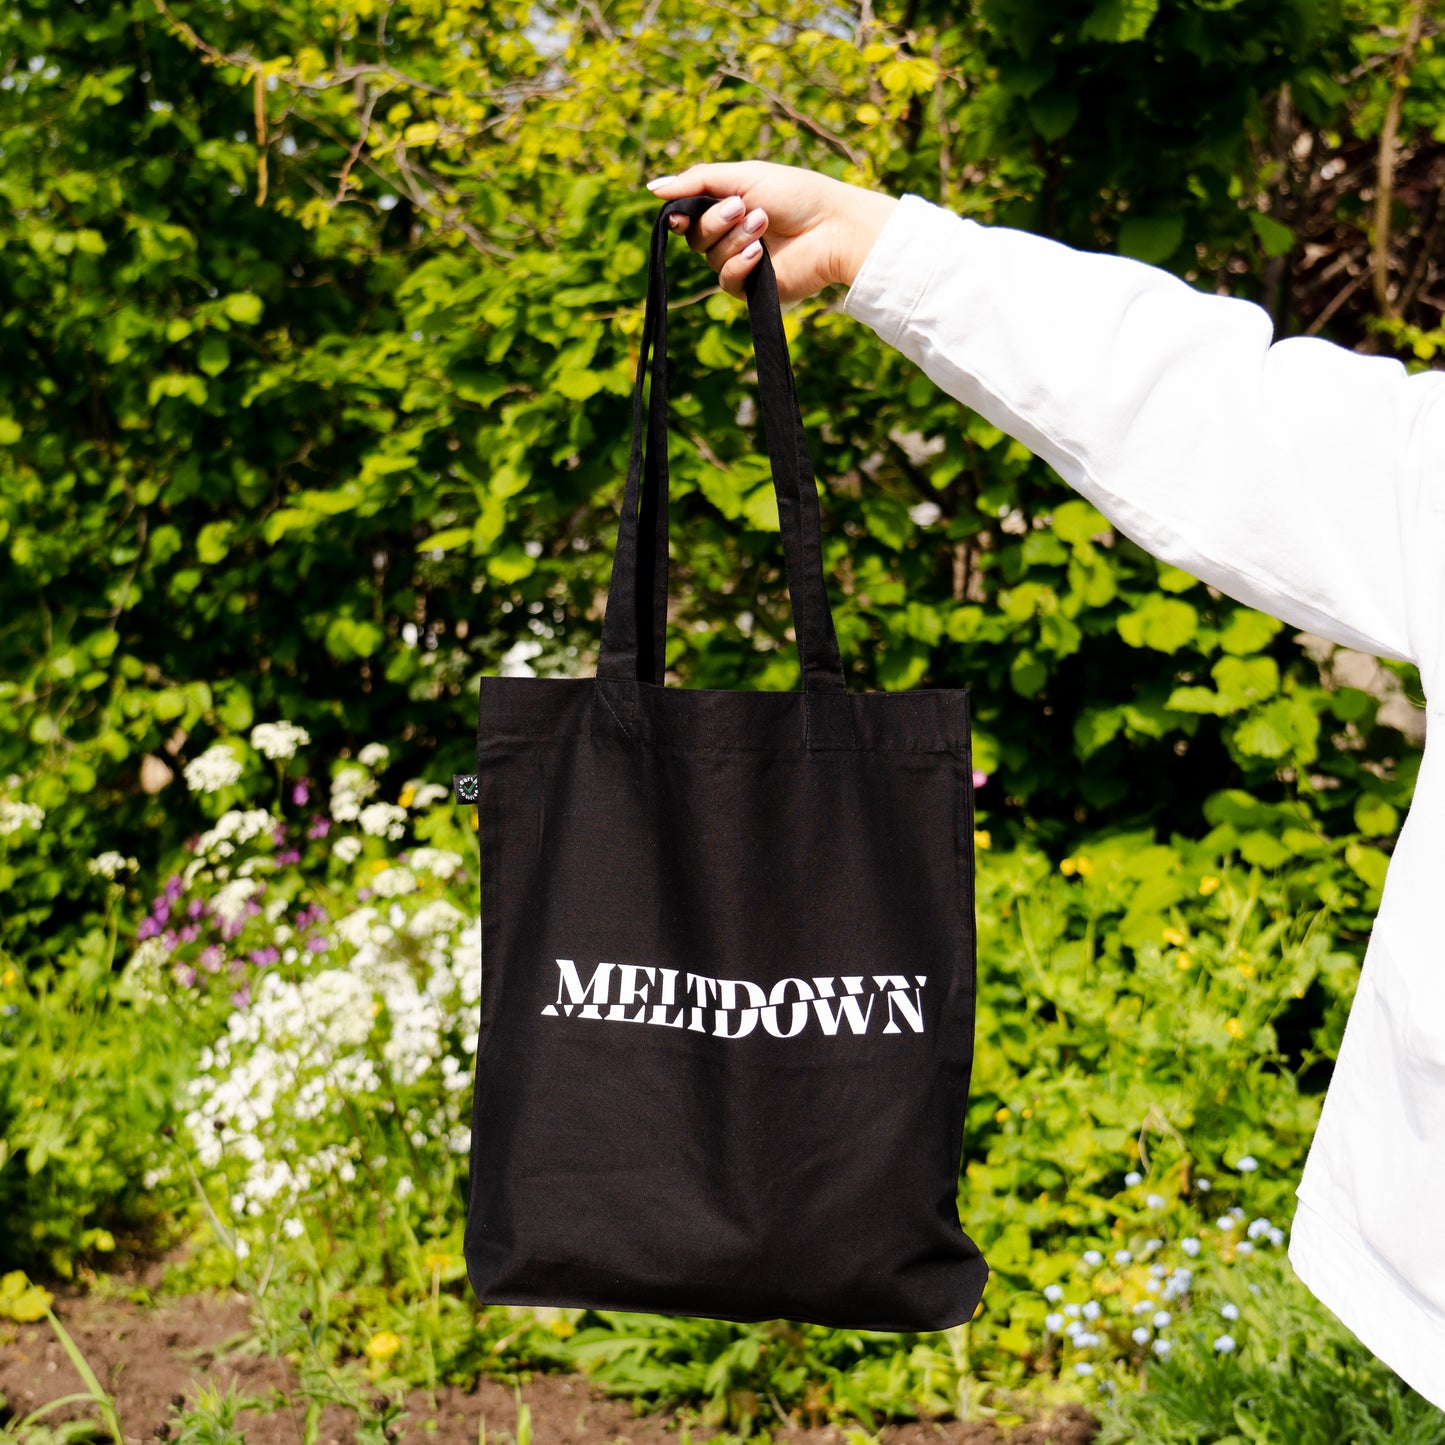 Meltdown Tote Bag